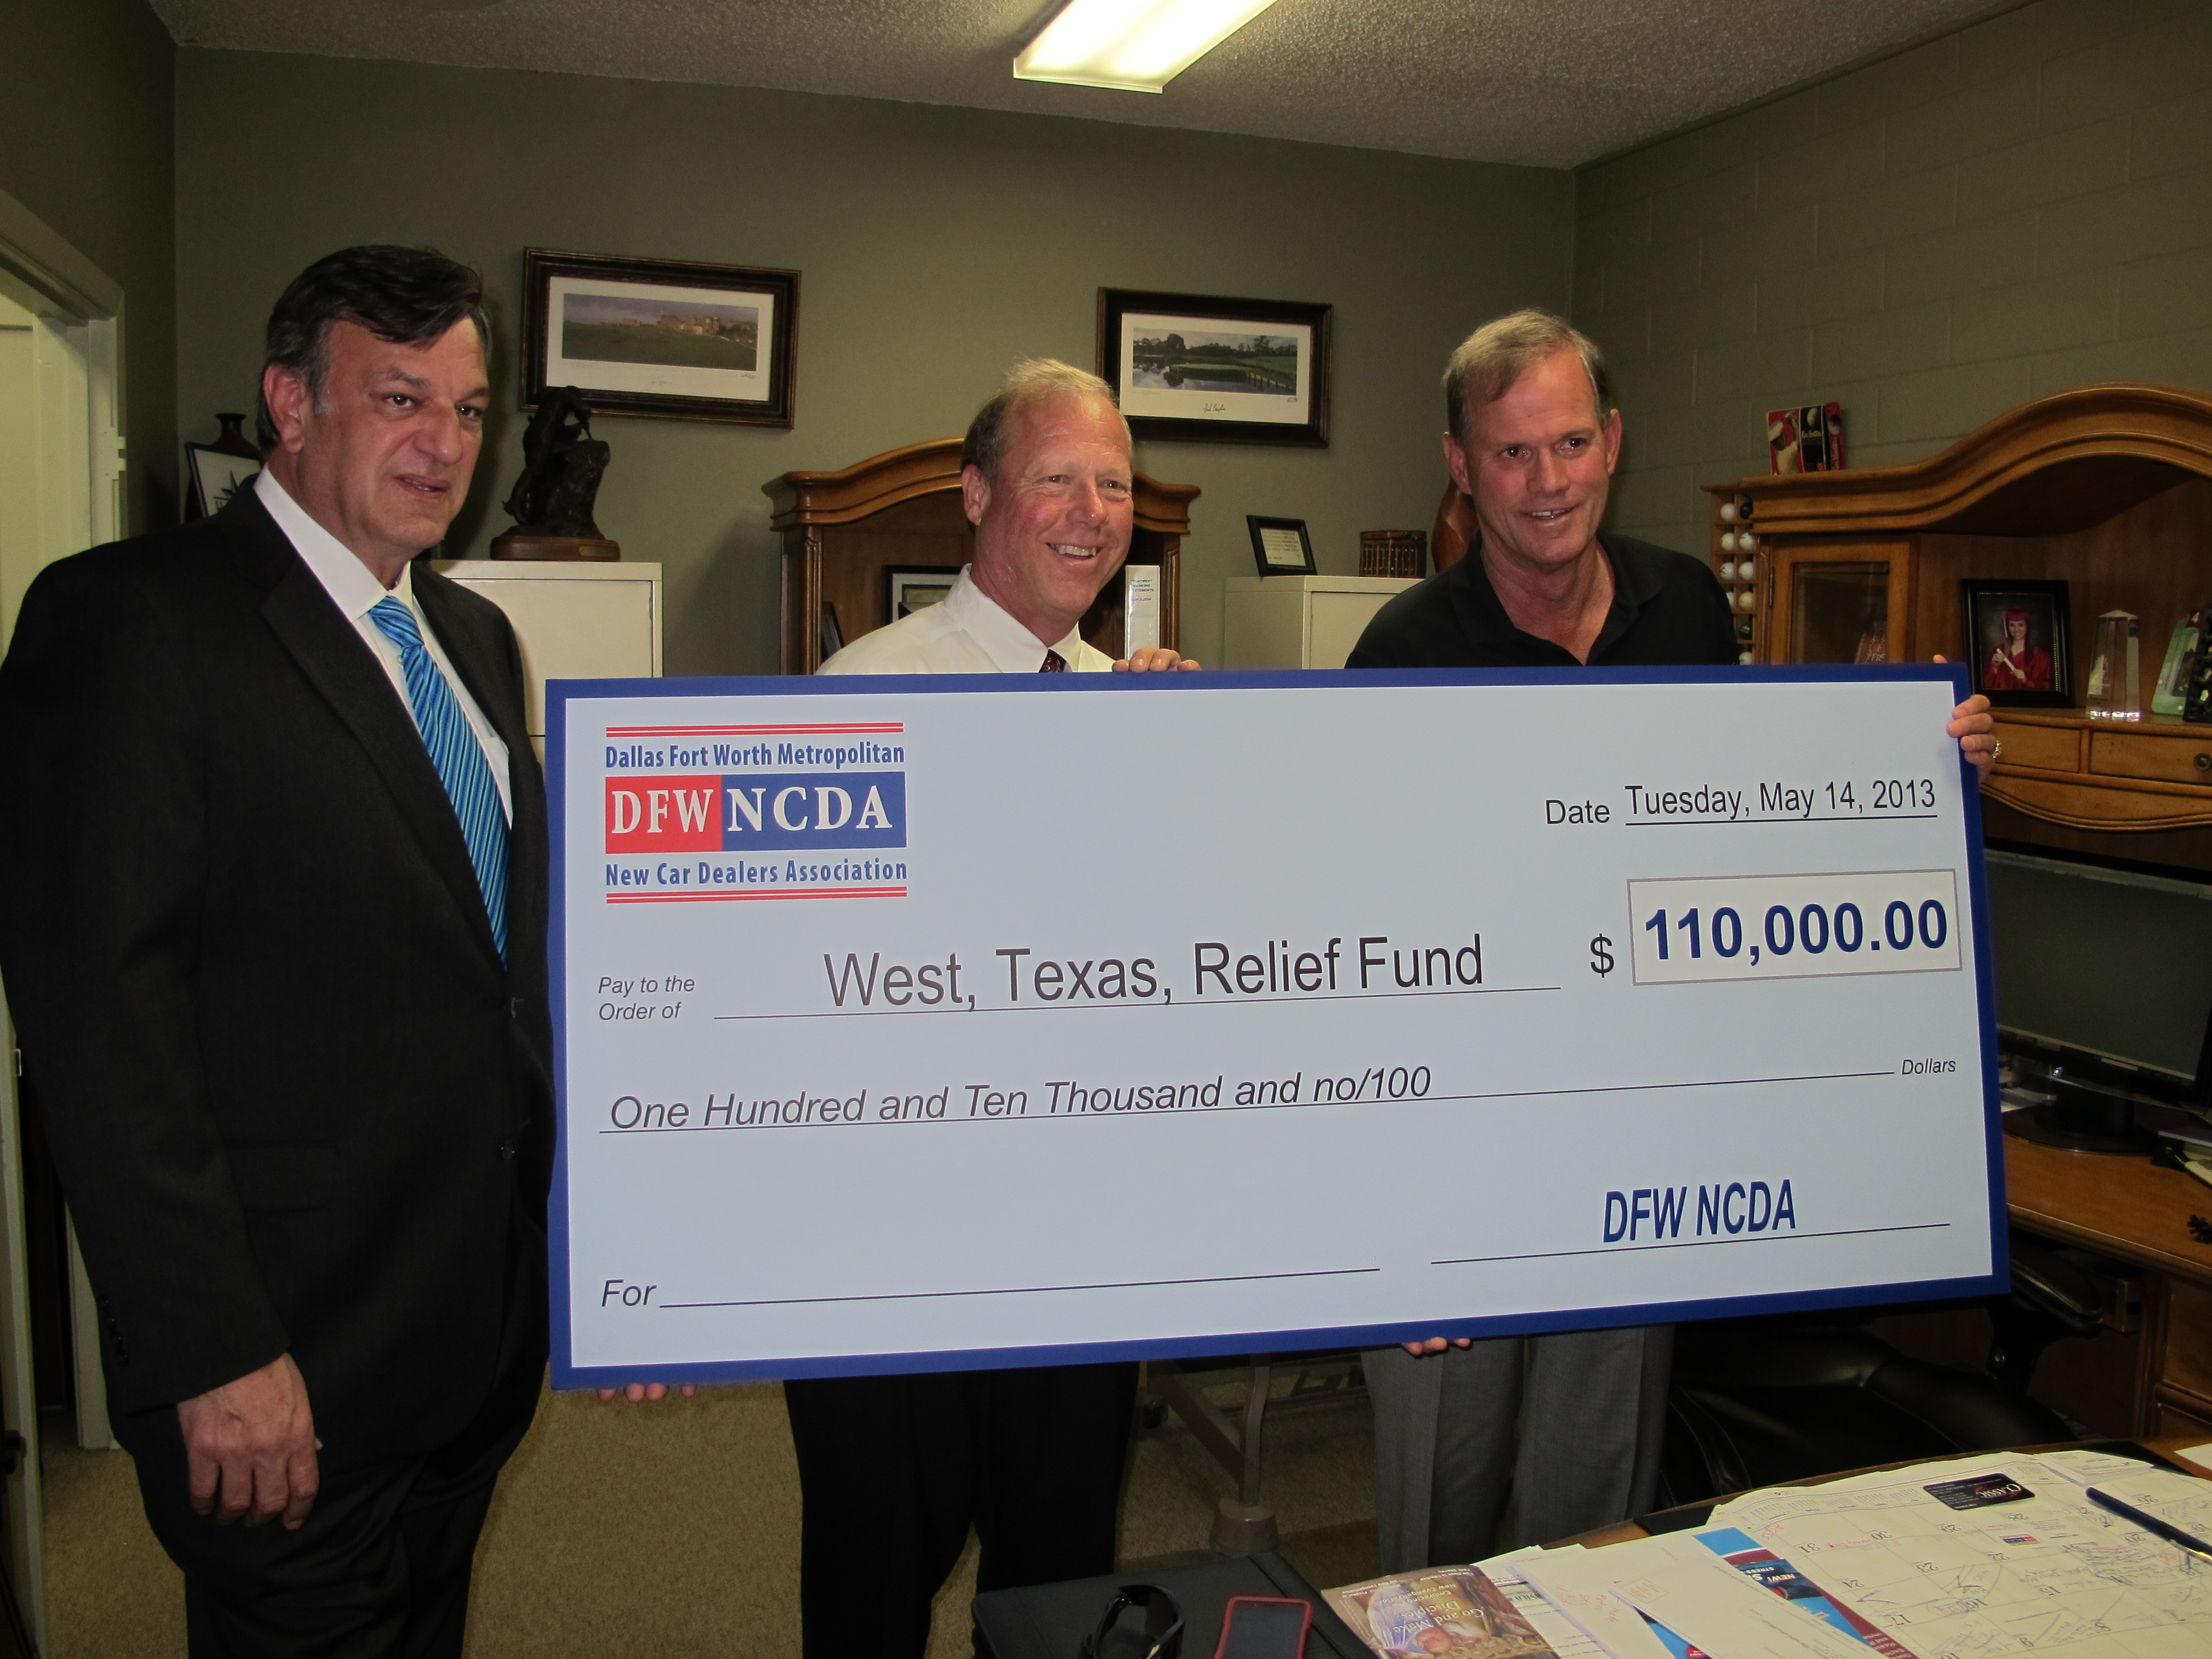 DFW NCDA presents check to West, Texas, Mayor Tommy Muska